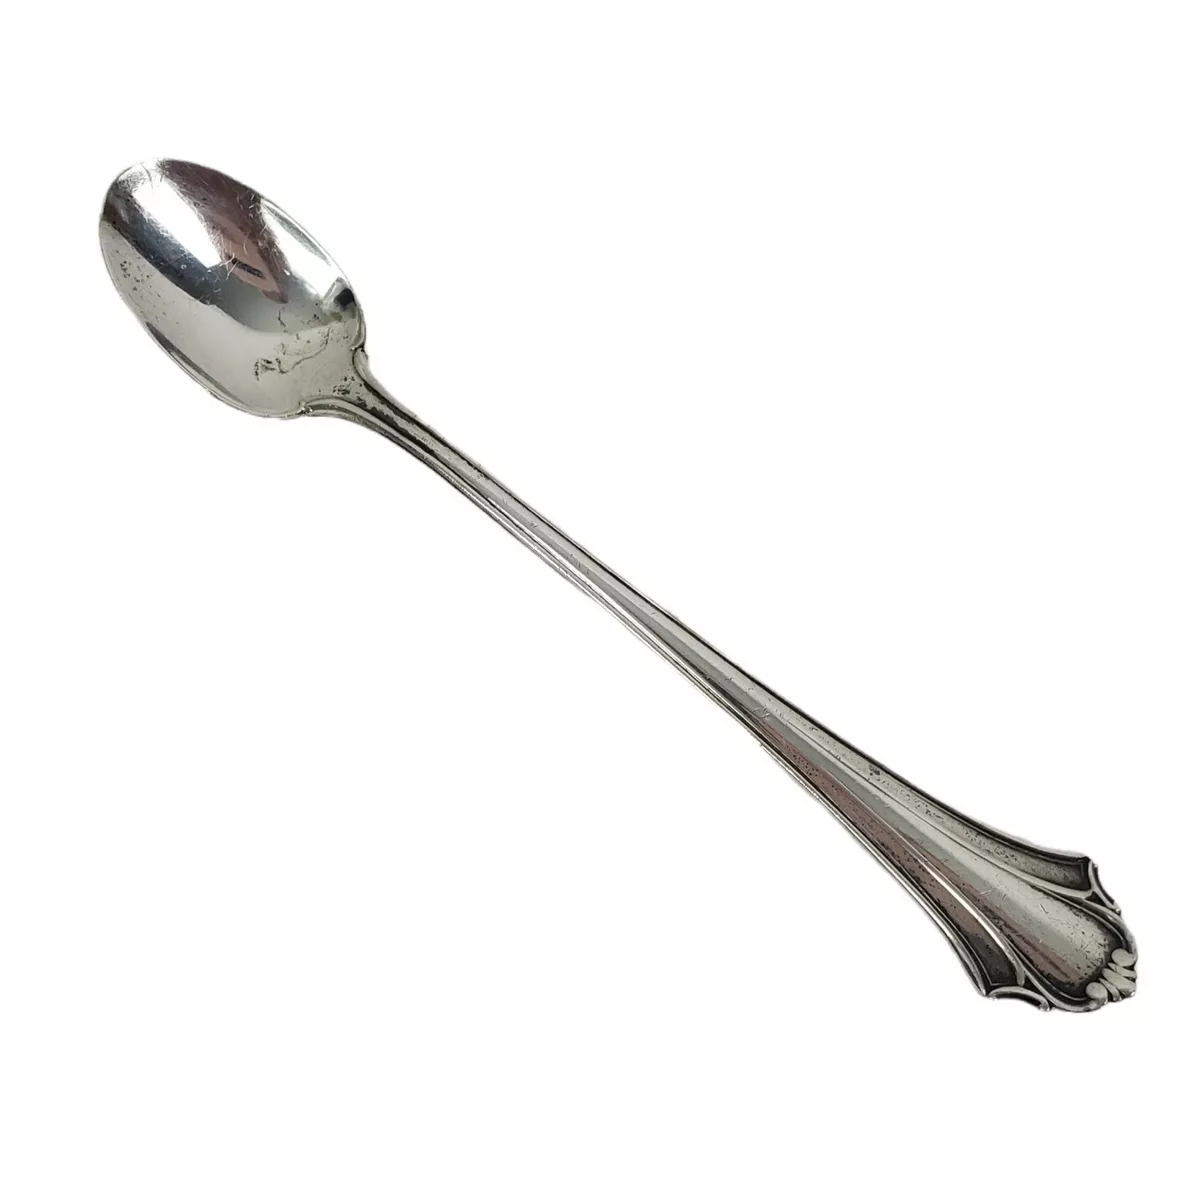 8 Best Baby Spoons